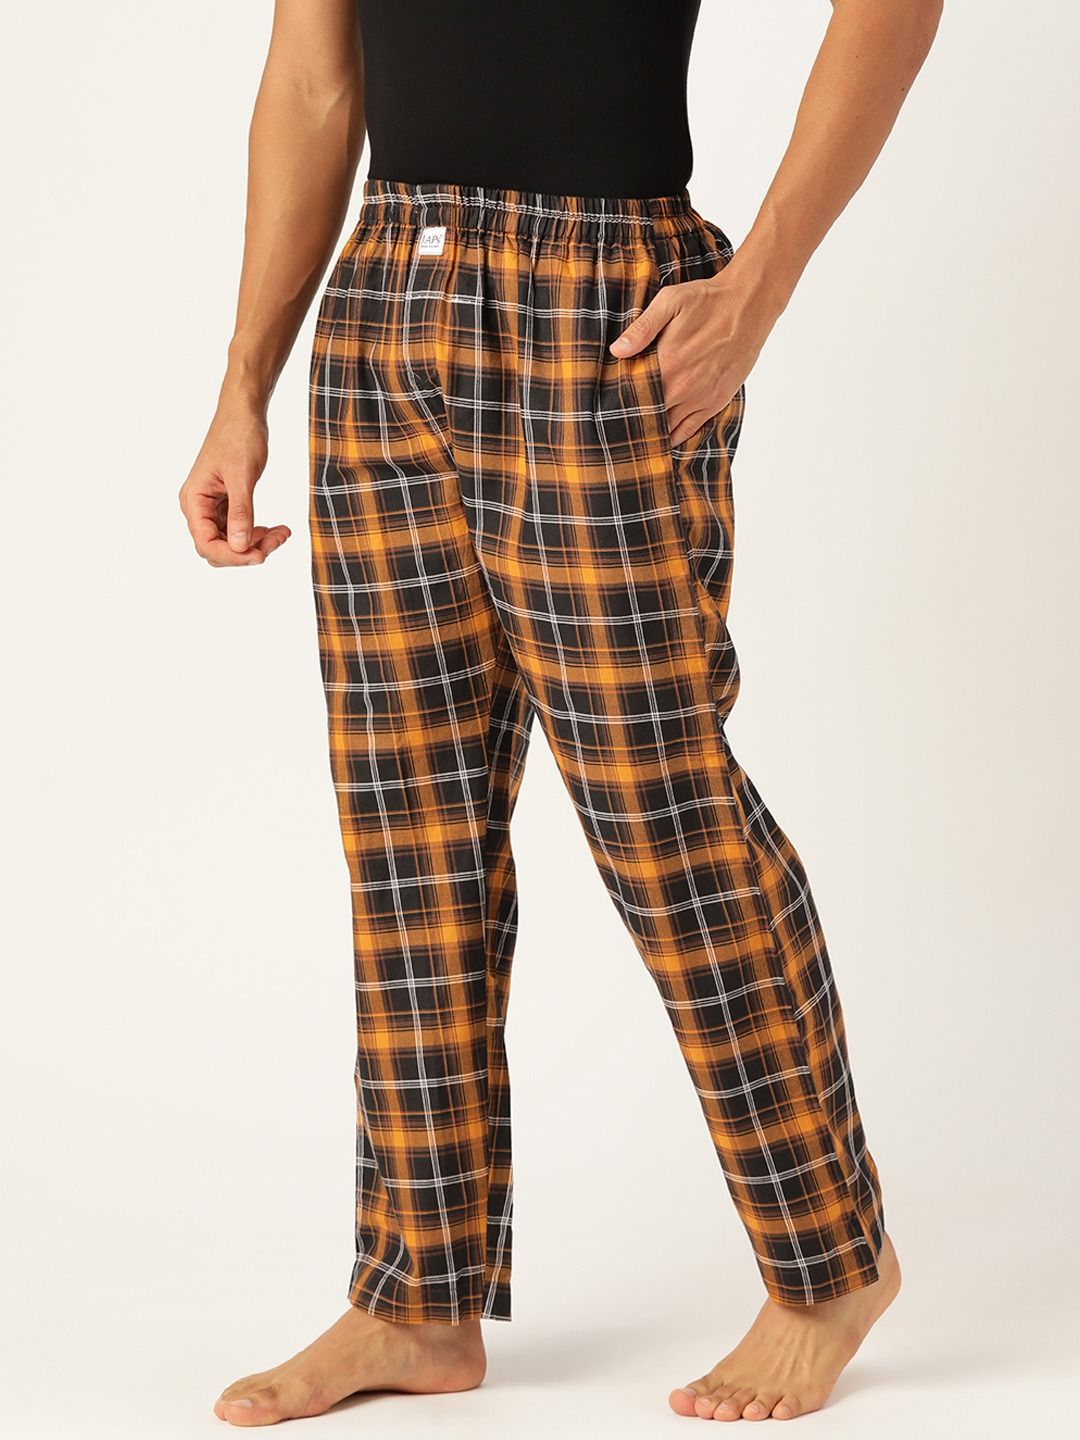 CYZ Comfortable Jersey Cotton Knit Pajama Lounge Sleep Pants-BlackGreyMelange2PK-S  at Amazon Men's Clothing store